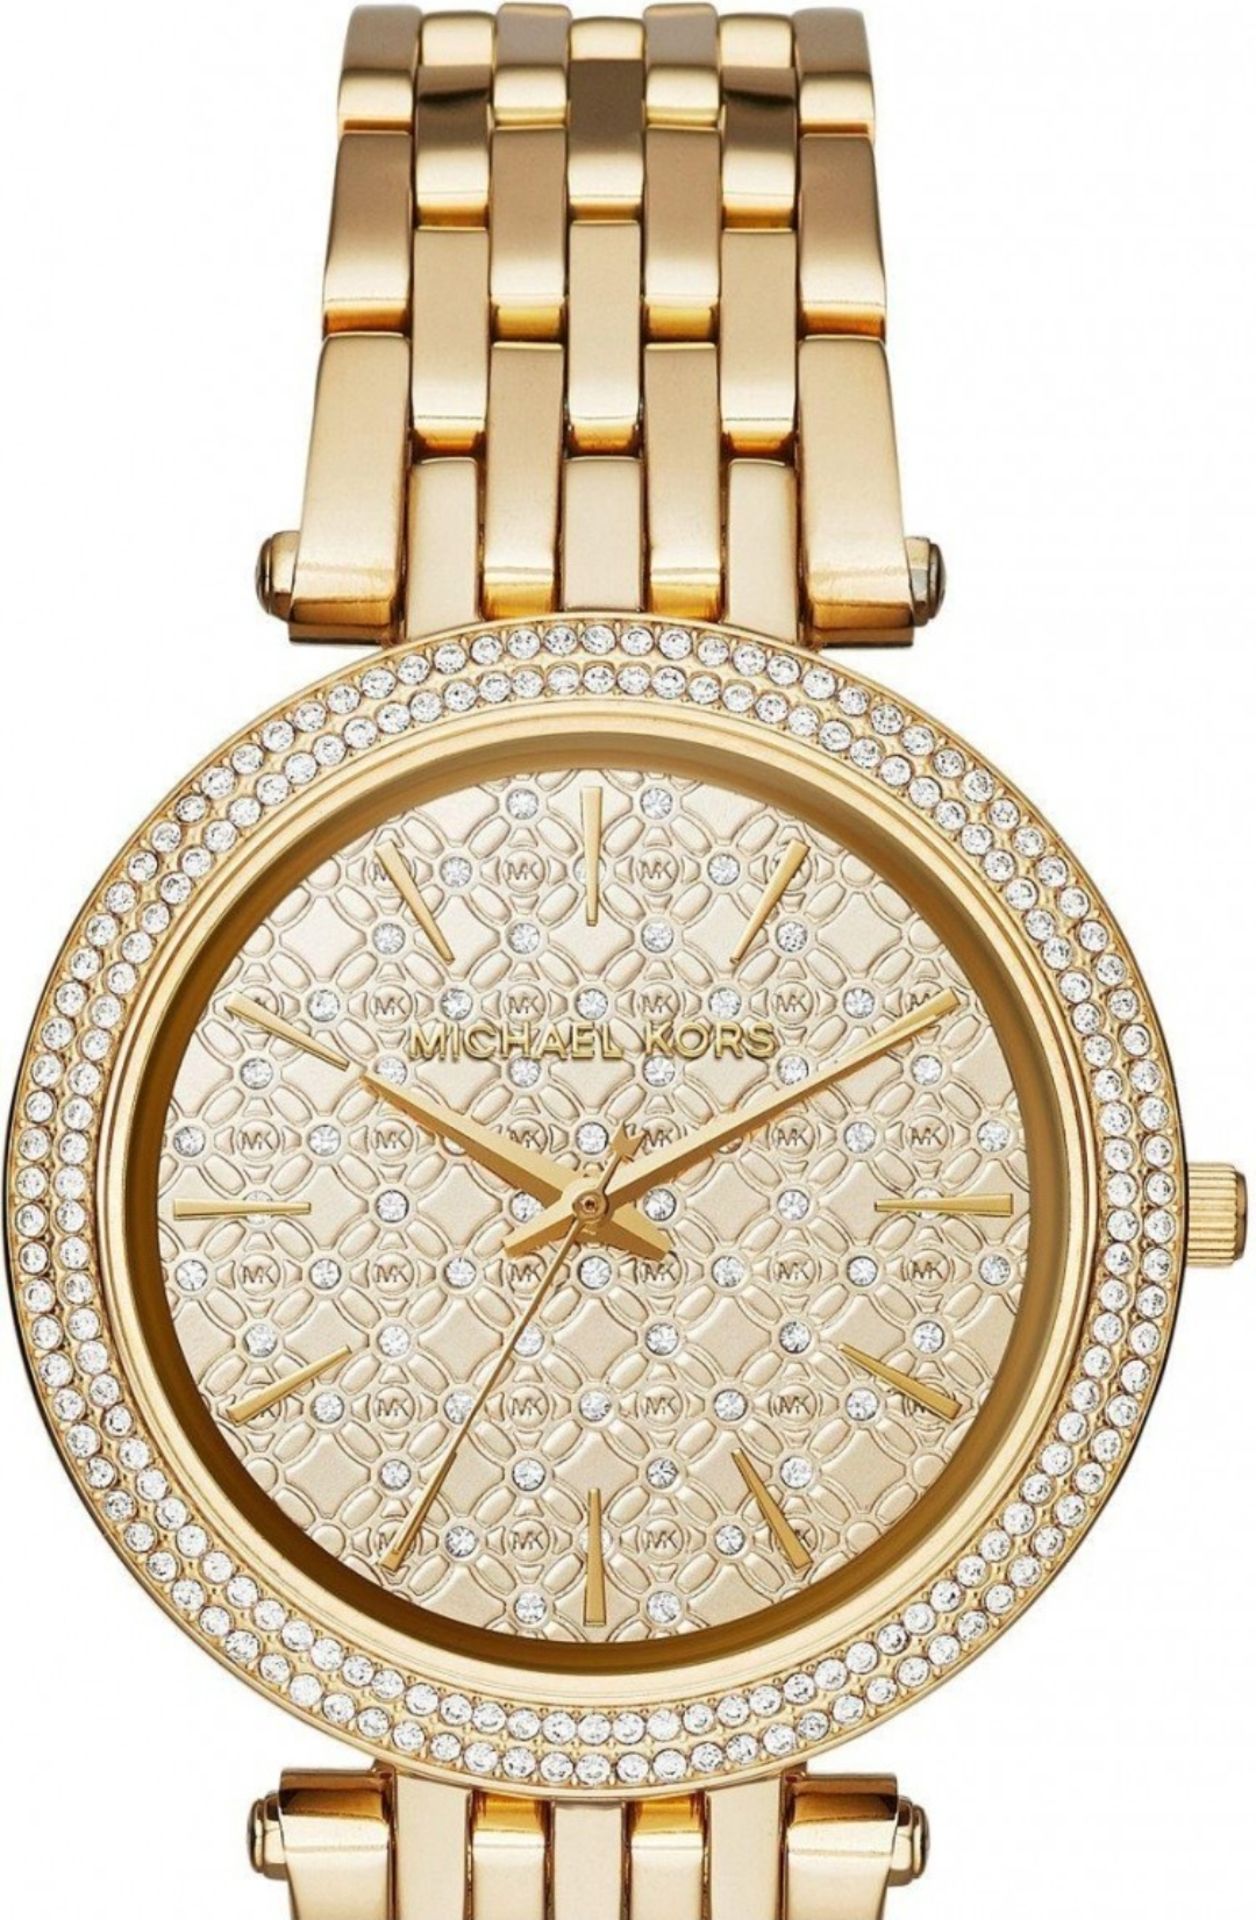 Michael Kors MK3398 Darci Gold-Tone Stainless Steel Ladies Watch - Image 3 of 6